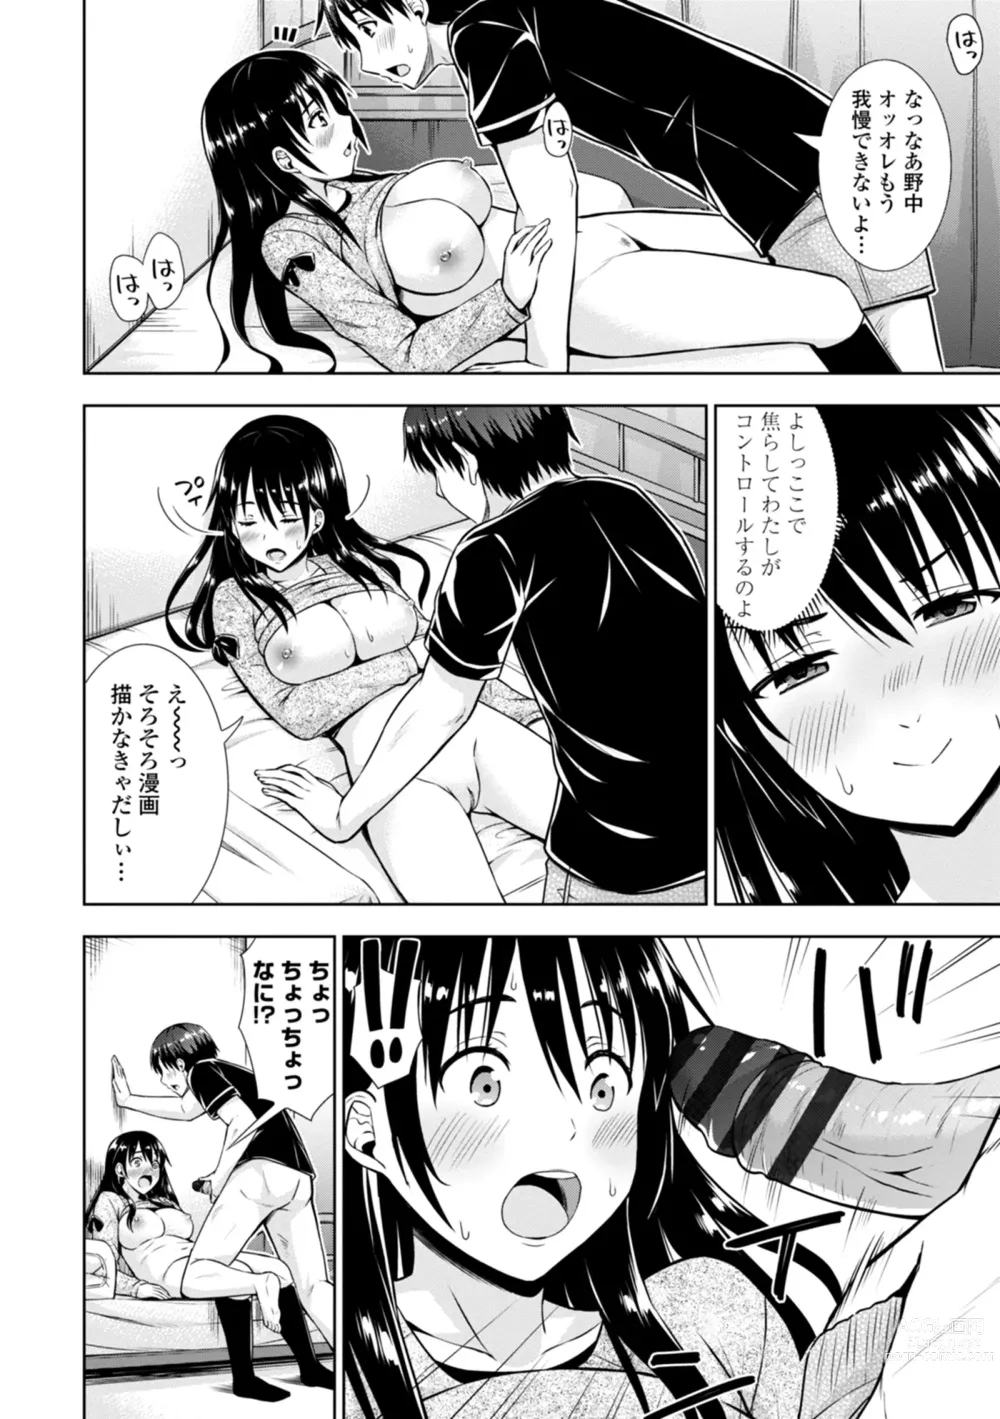 Page 14 of manga Onnanoko datte H Shitaku Narundamon.